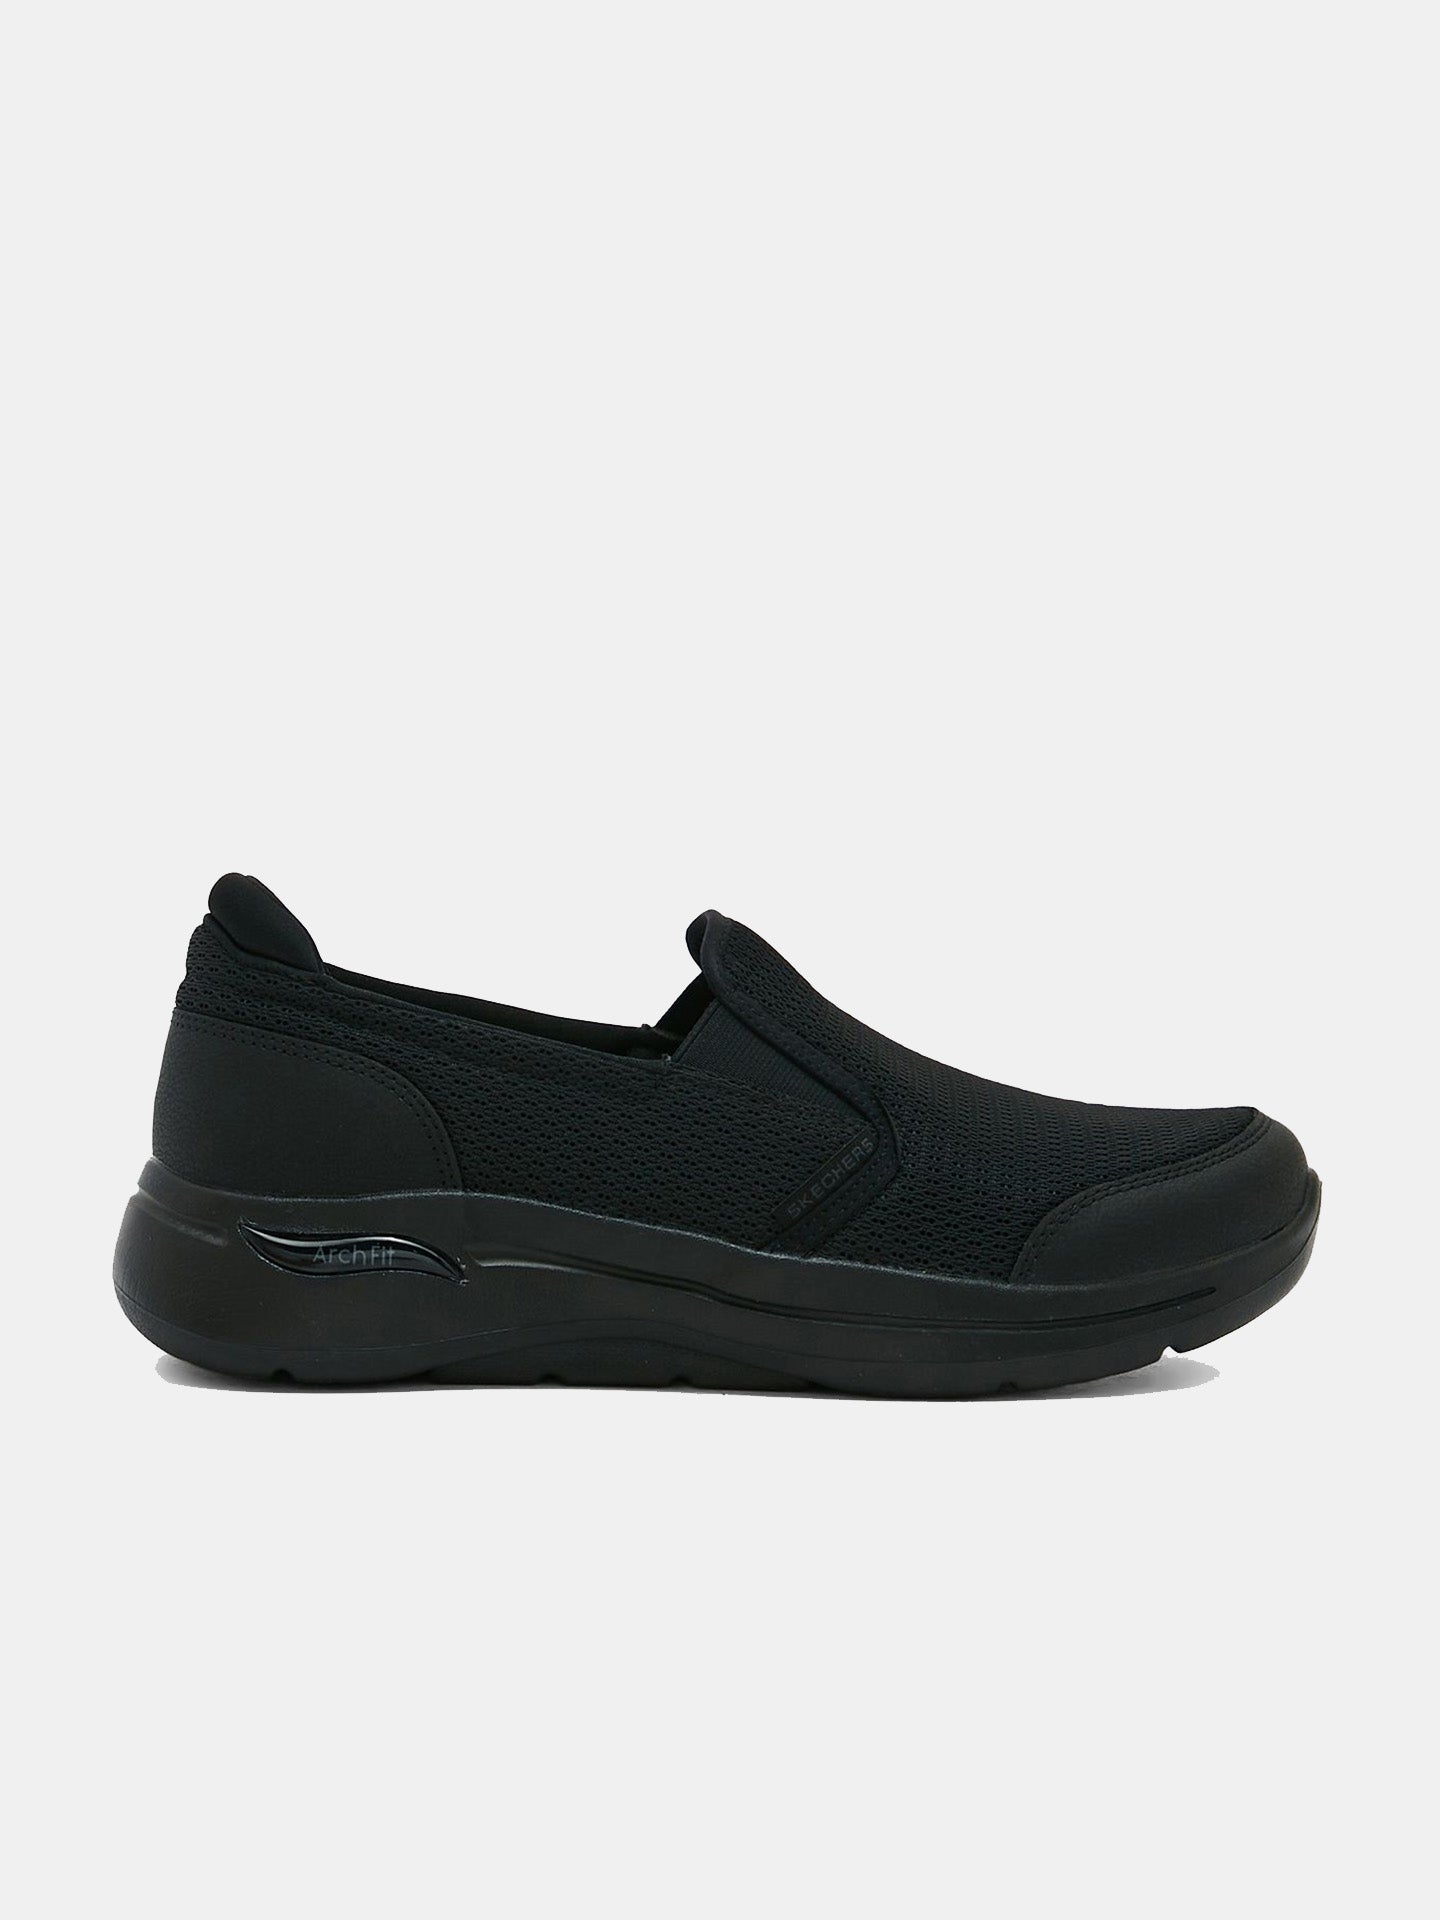 Skechers Men's GO WALK Arch Fit - Robust Comfort Shoes